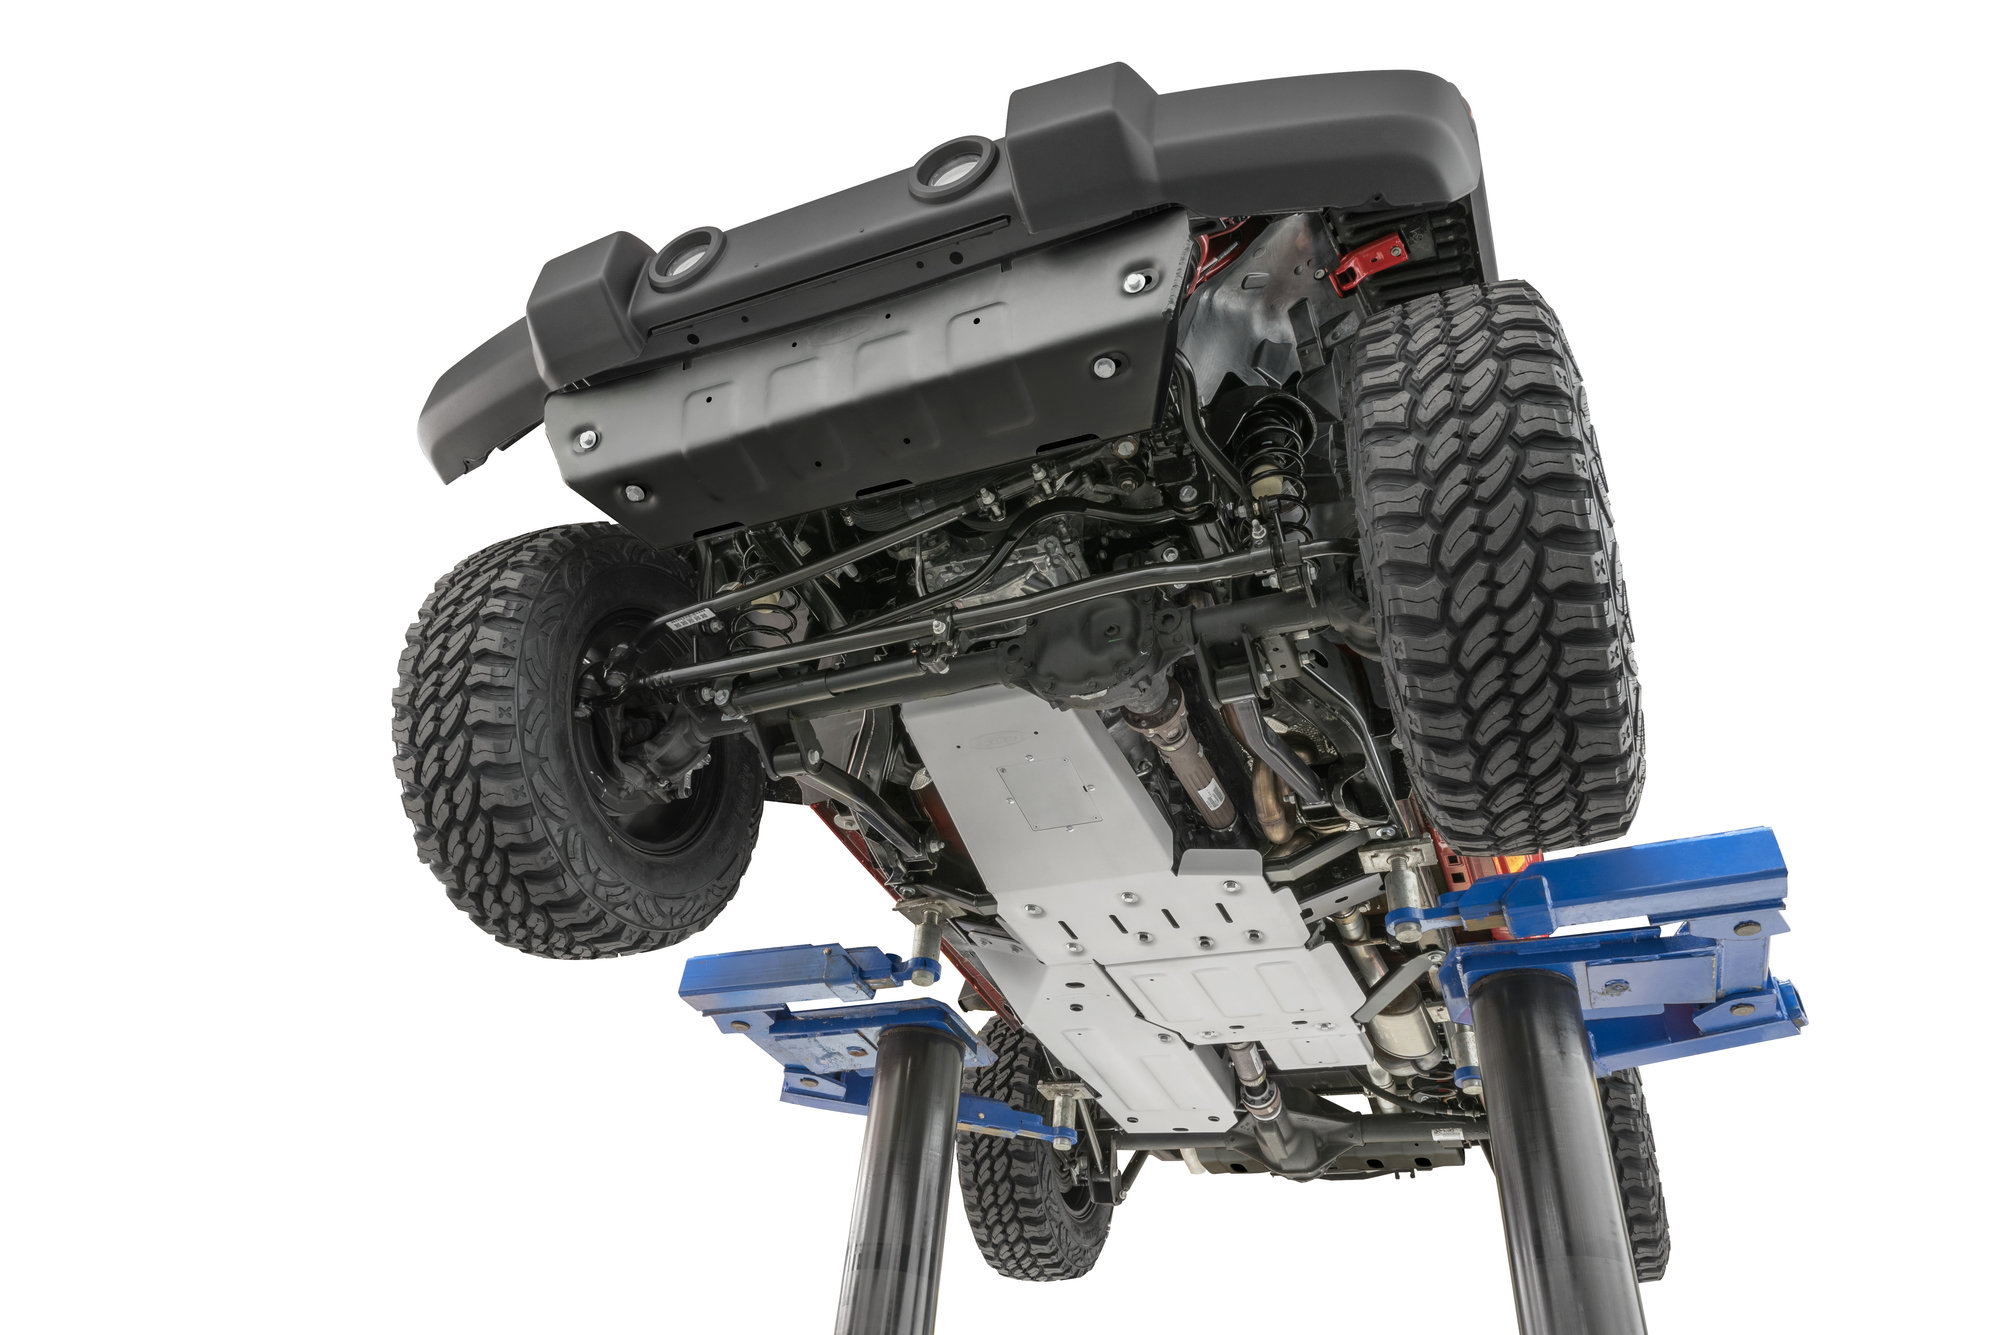 Foresight Normal I will be strong Quadratec Aluminum Modular Skid Plate System for 07-18 Jeep Wrangler JK |  Quadratec